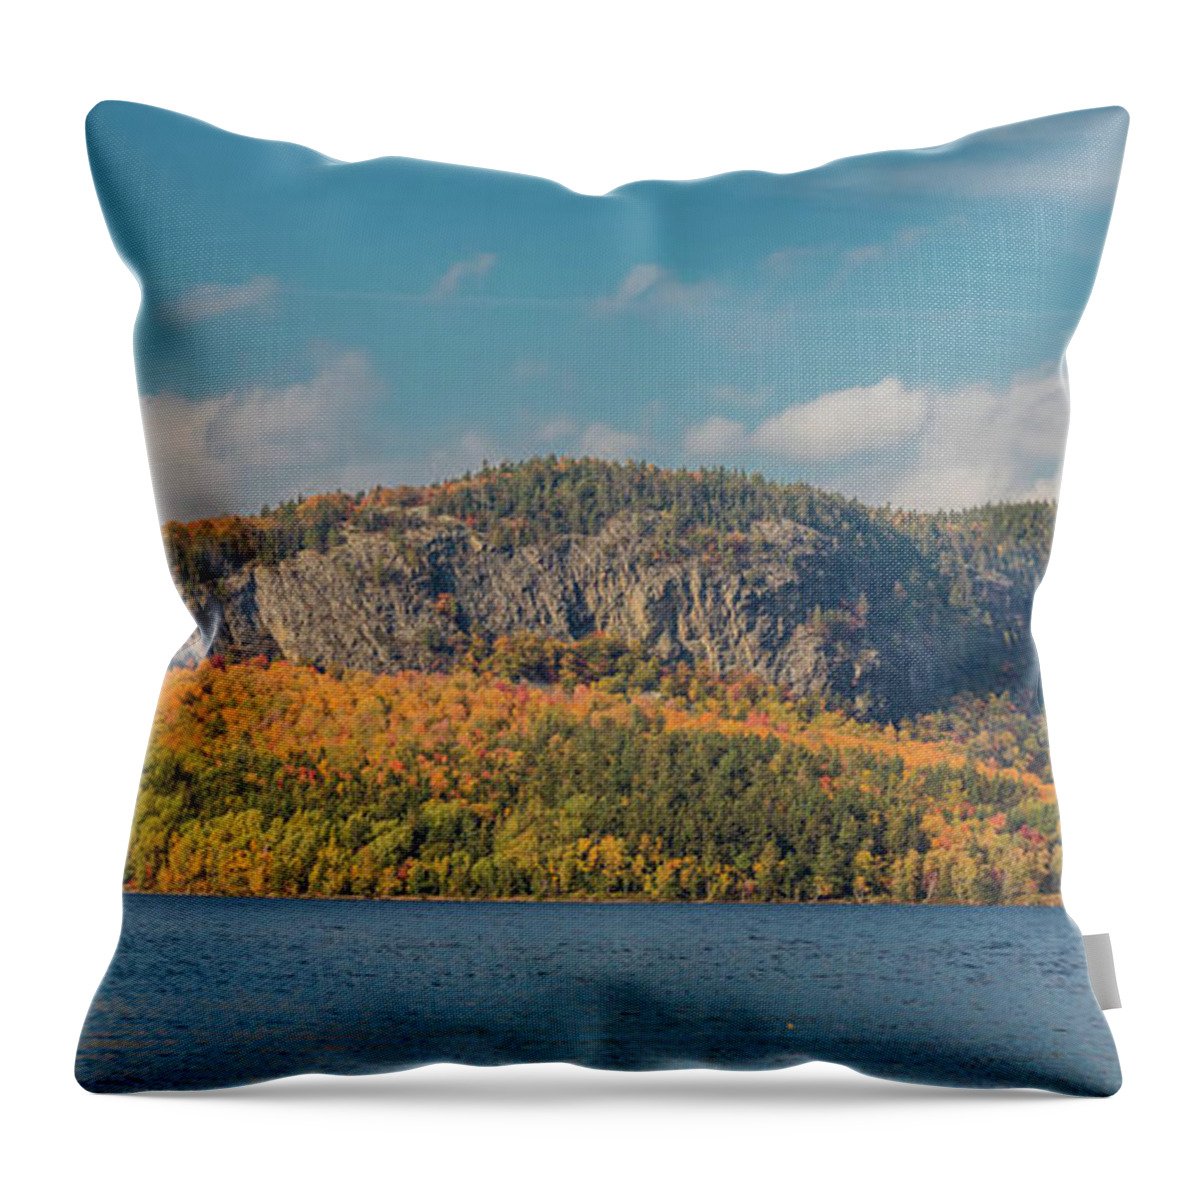 Mount Kineo In Autumn Throw Pillow featuring the photograph Mount Kineo In Autumn by Dan Sproul